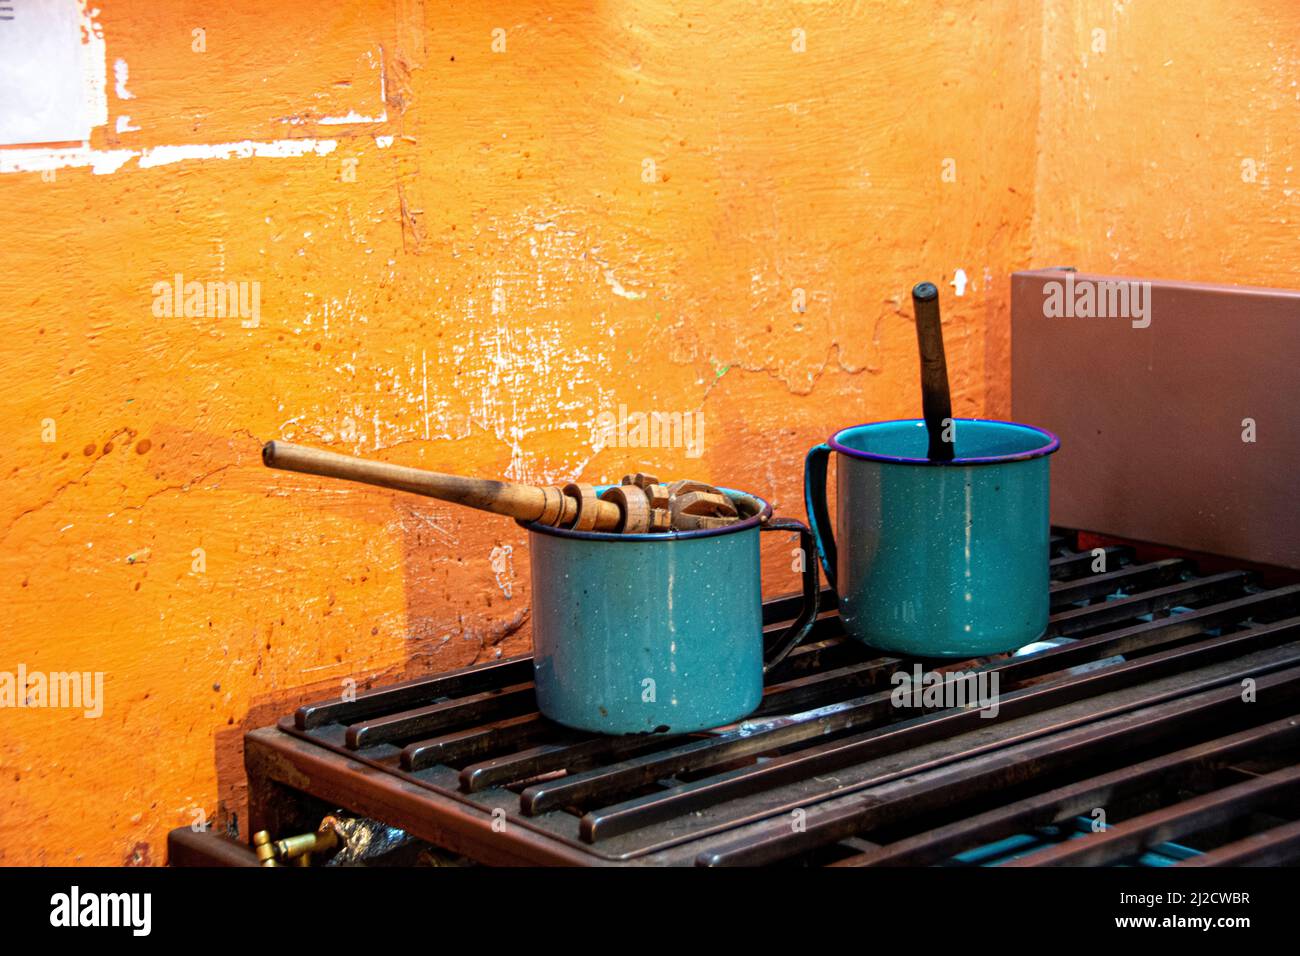 Two blue-green cooking pots on a stove. San Miguel de Allende, Guanajuato, Mexico. Stock Photo